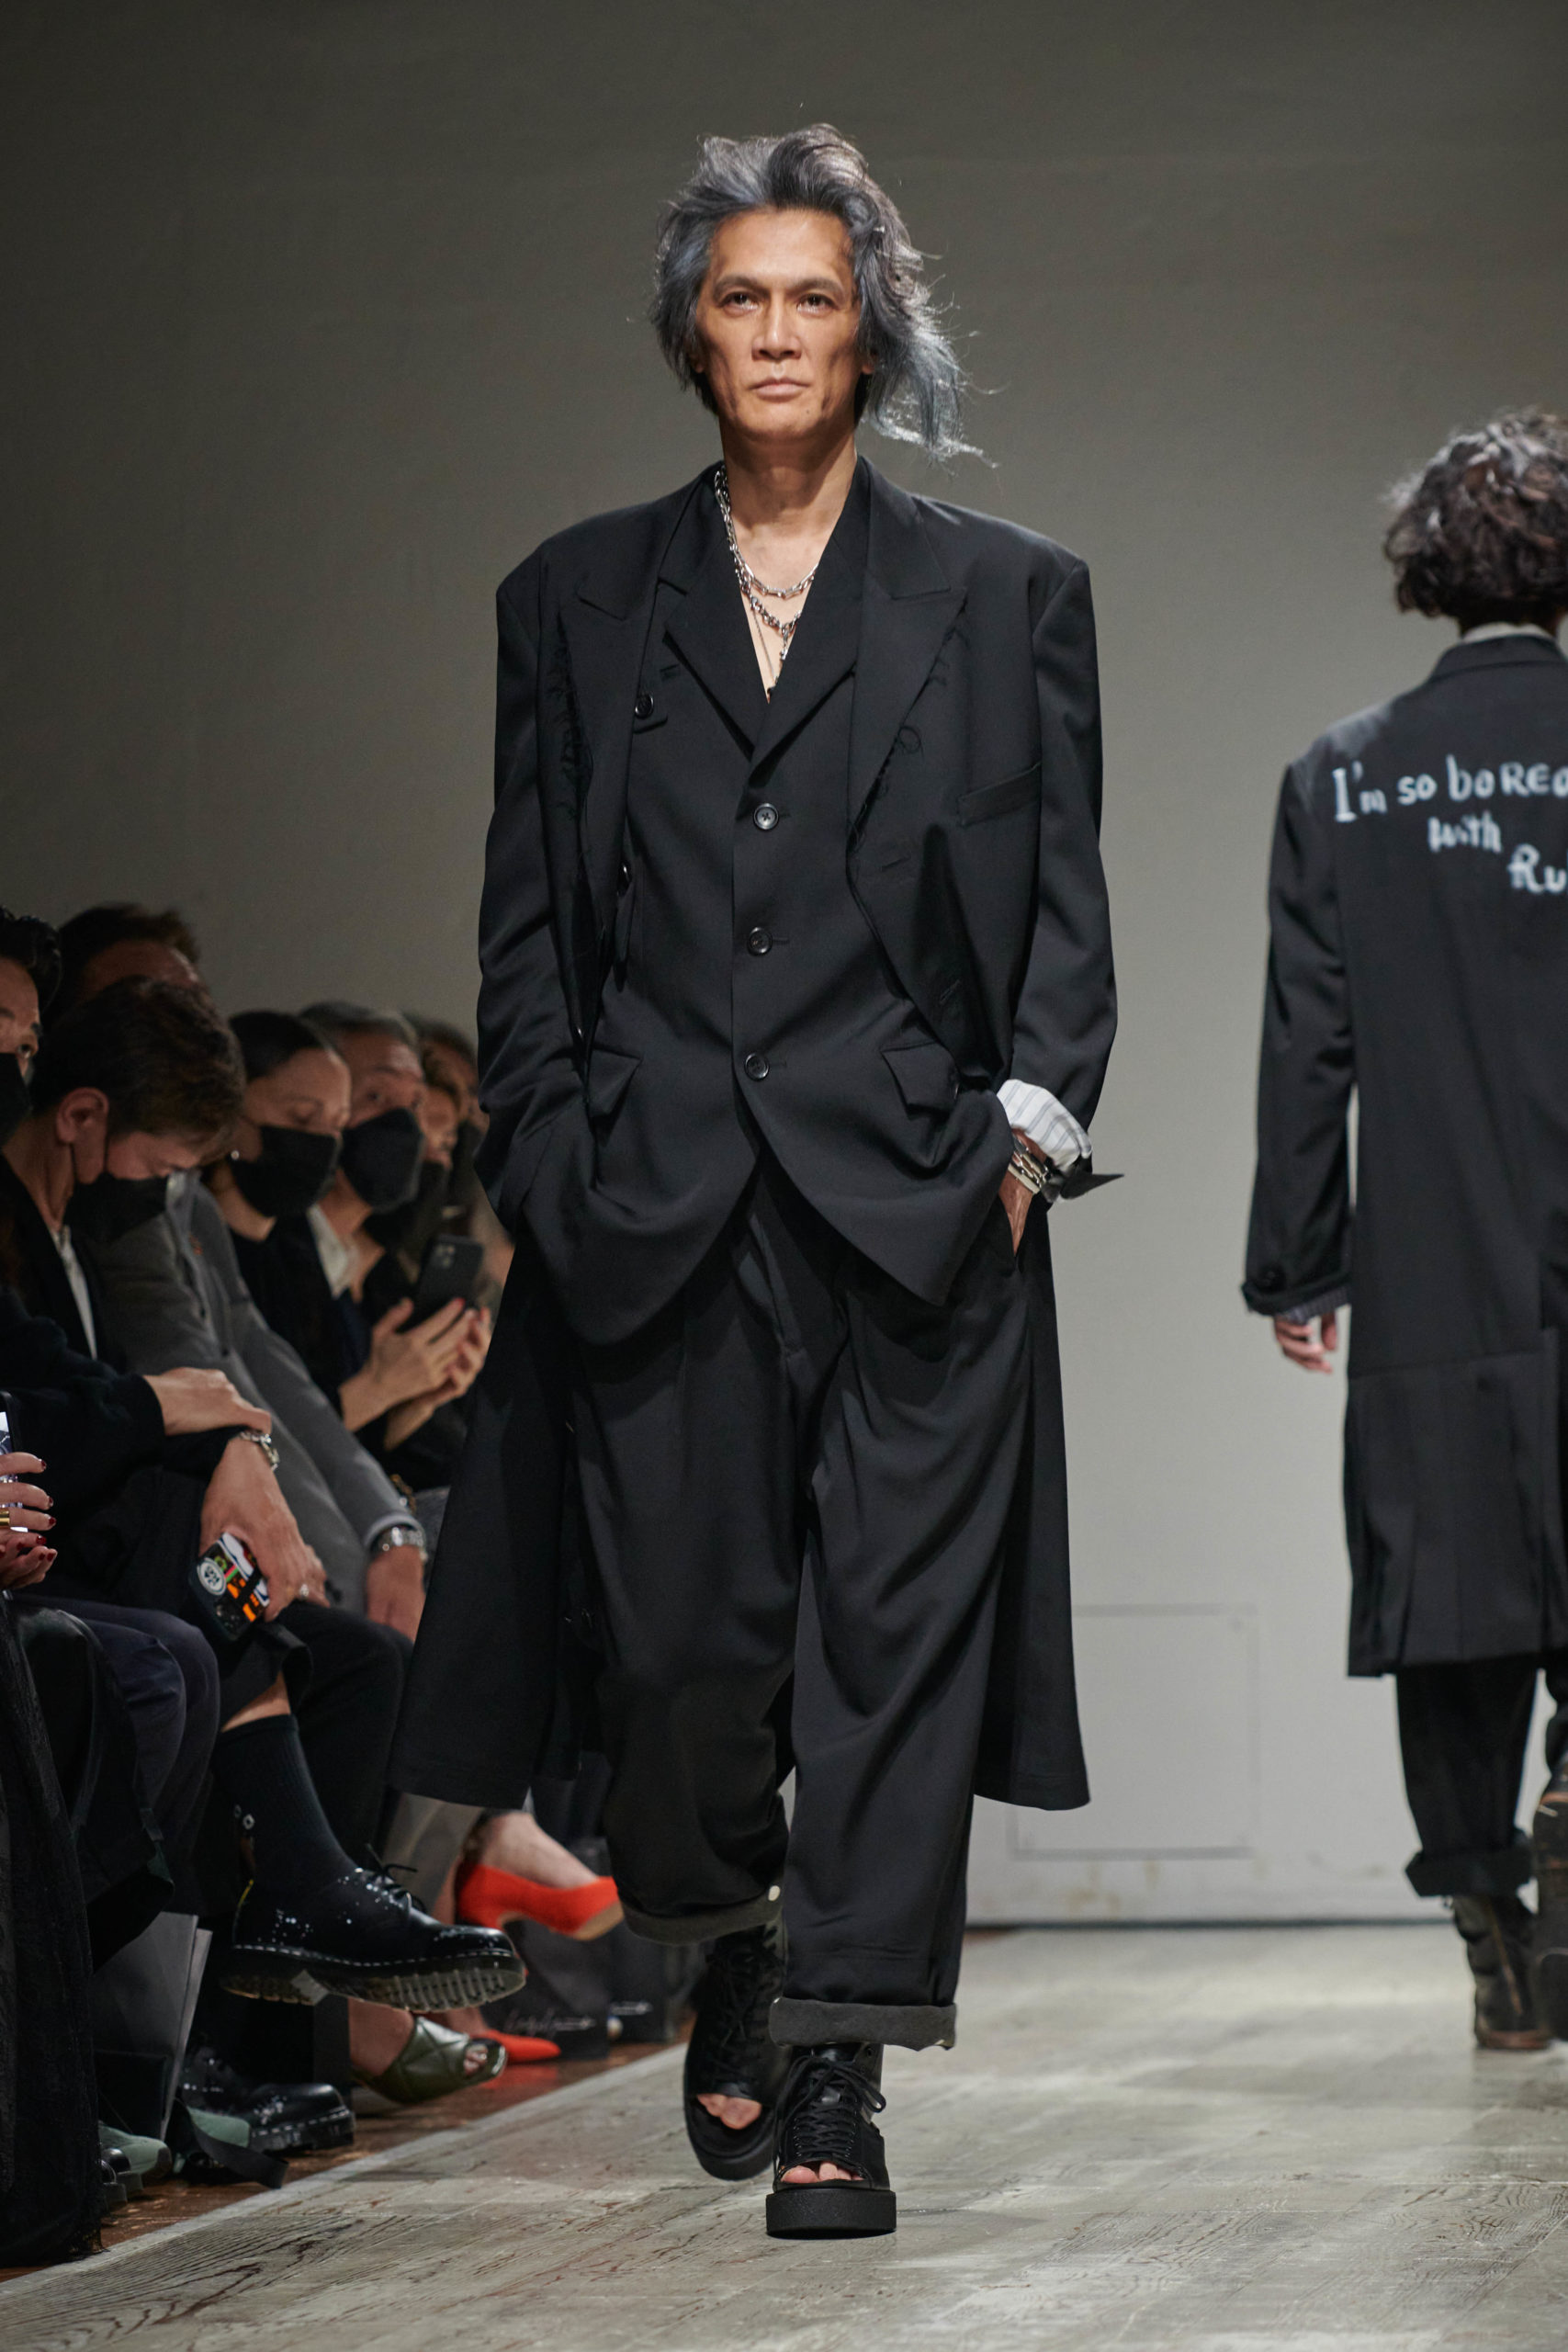 Can Yohji Yamamoto Save Fashion From Itself?